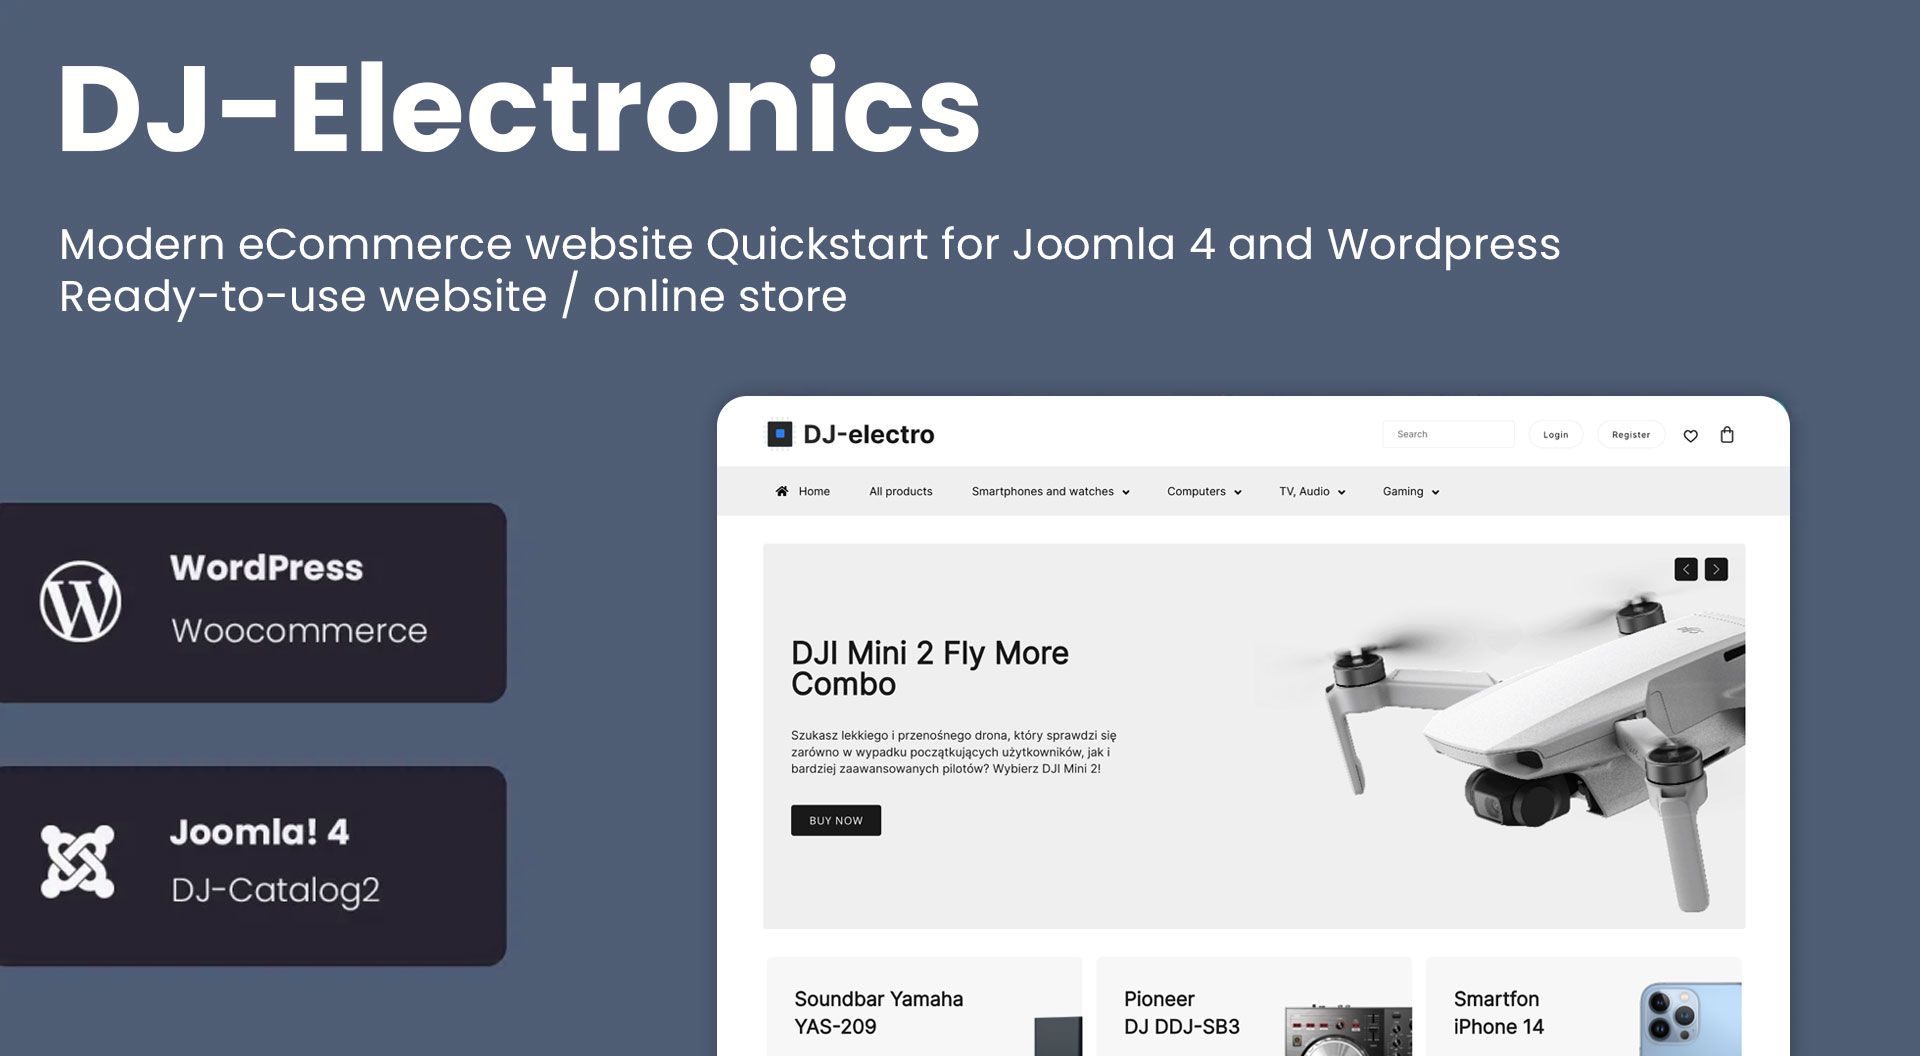 Discover DJ-Electronics - the eCommerce website Quickstart for Joomla 4 & Wordpress